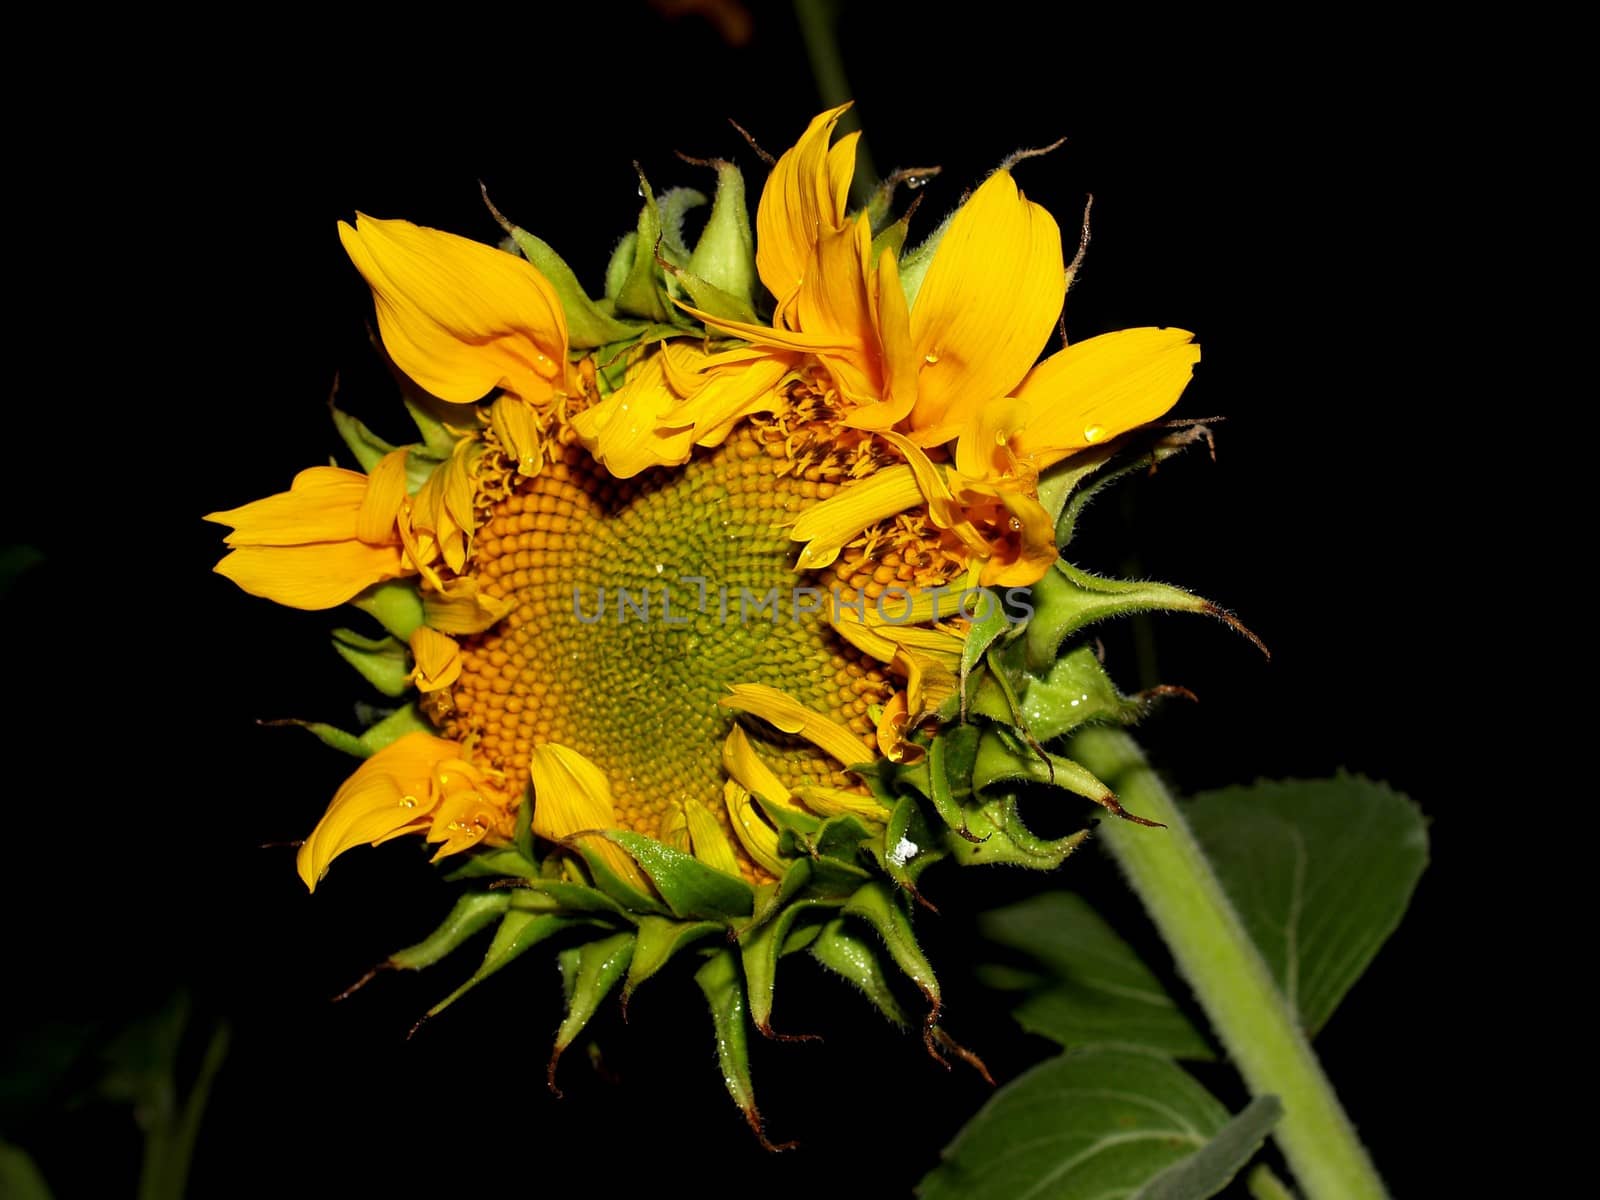 image  Sunflower field by kiddaikiddee